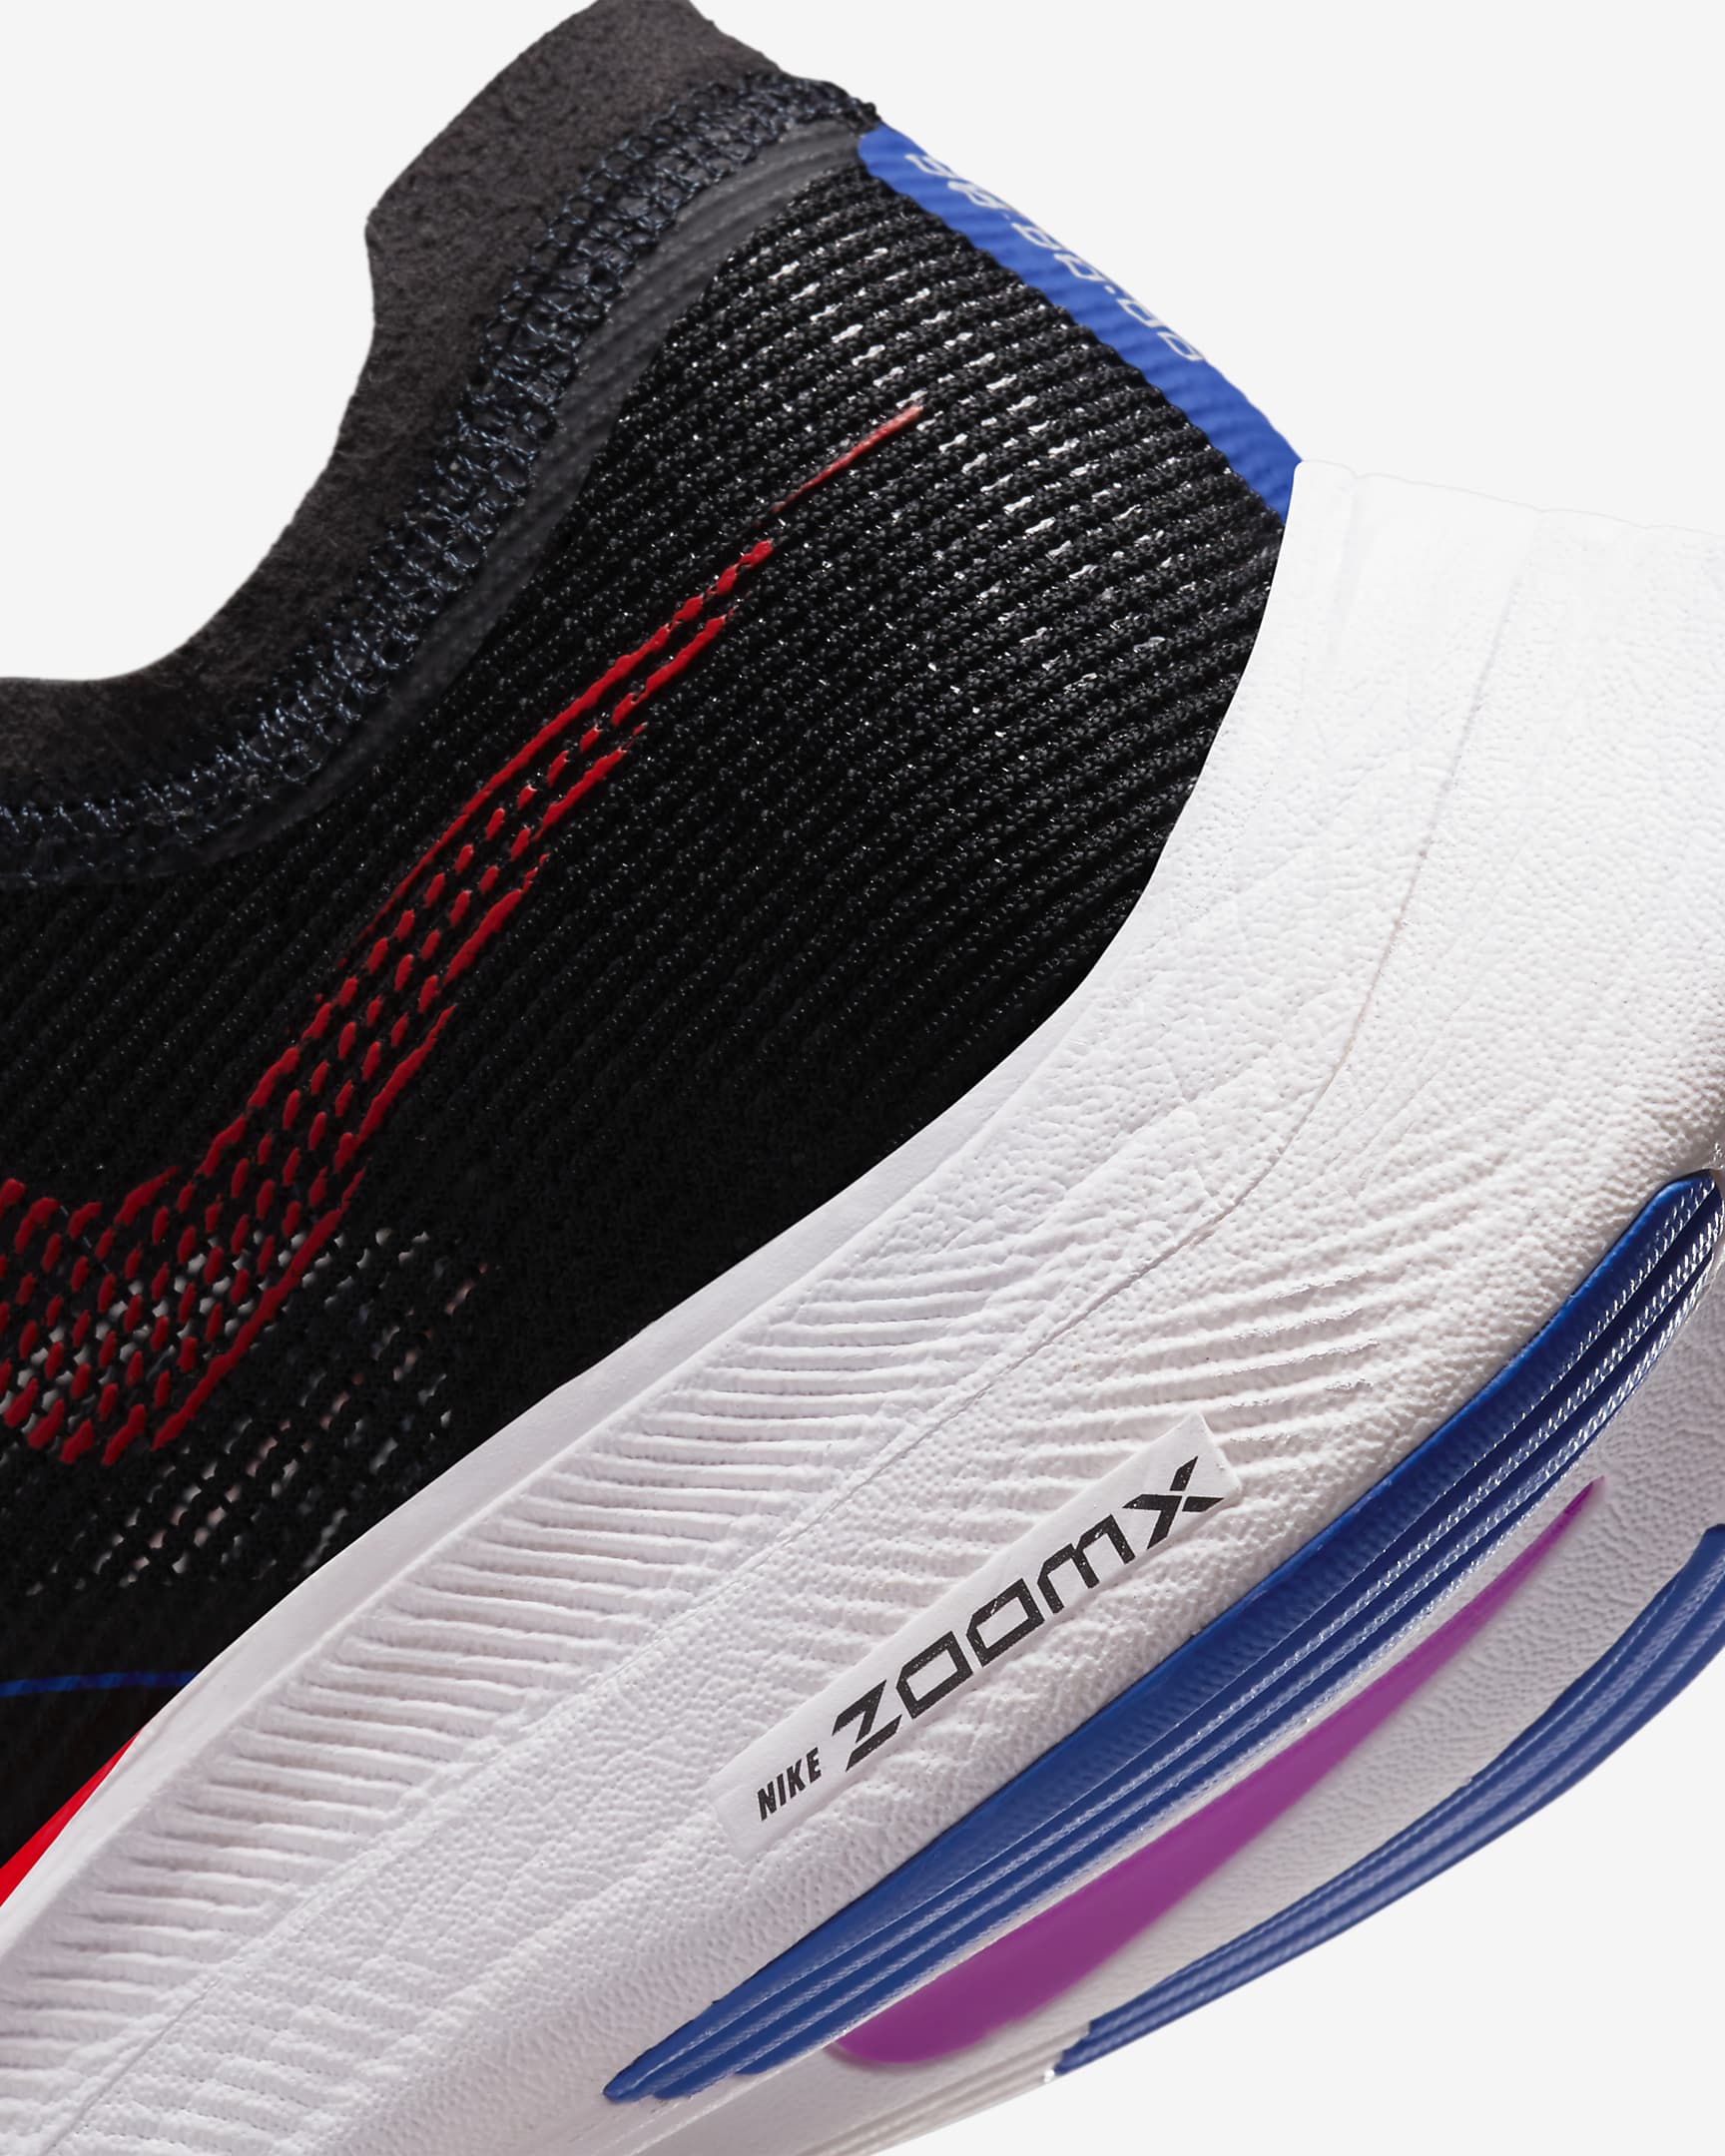 Nike Vaporfly 2 Women's Road Racing Shoes - Black/Fuchsia Dream/White/Bright Crimson